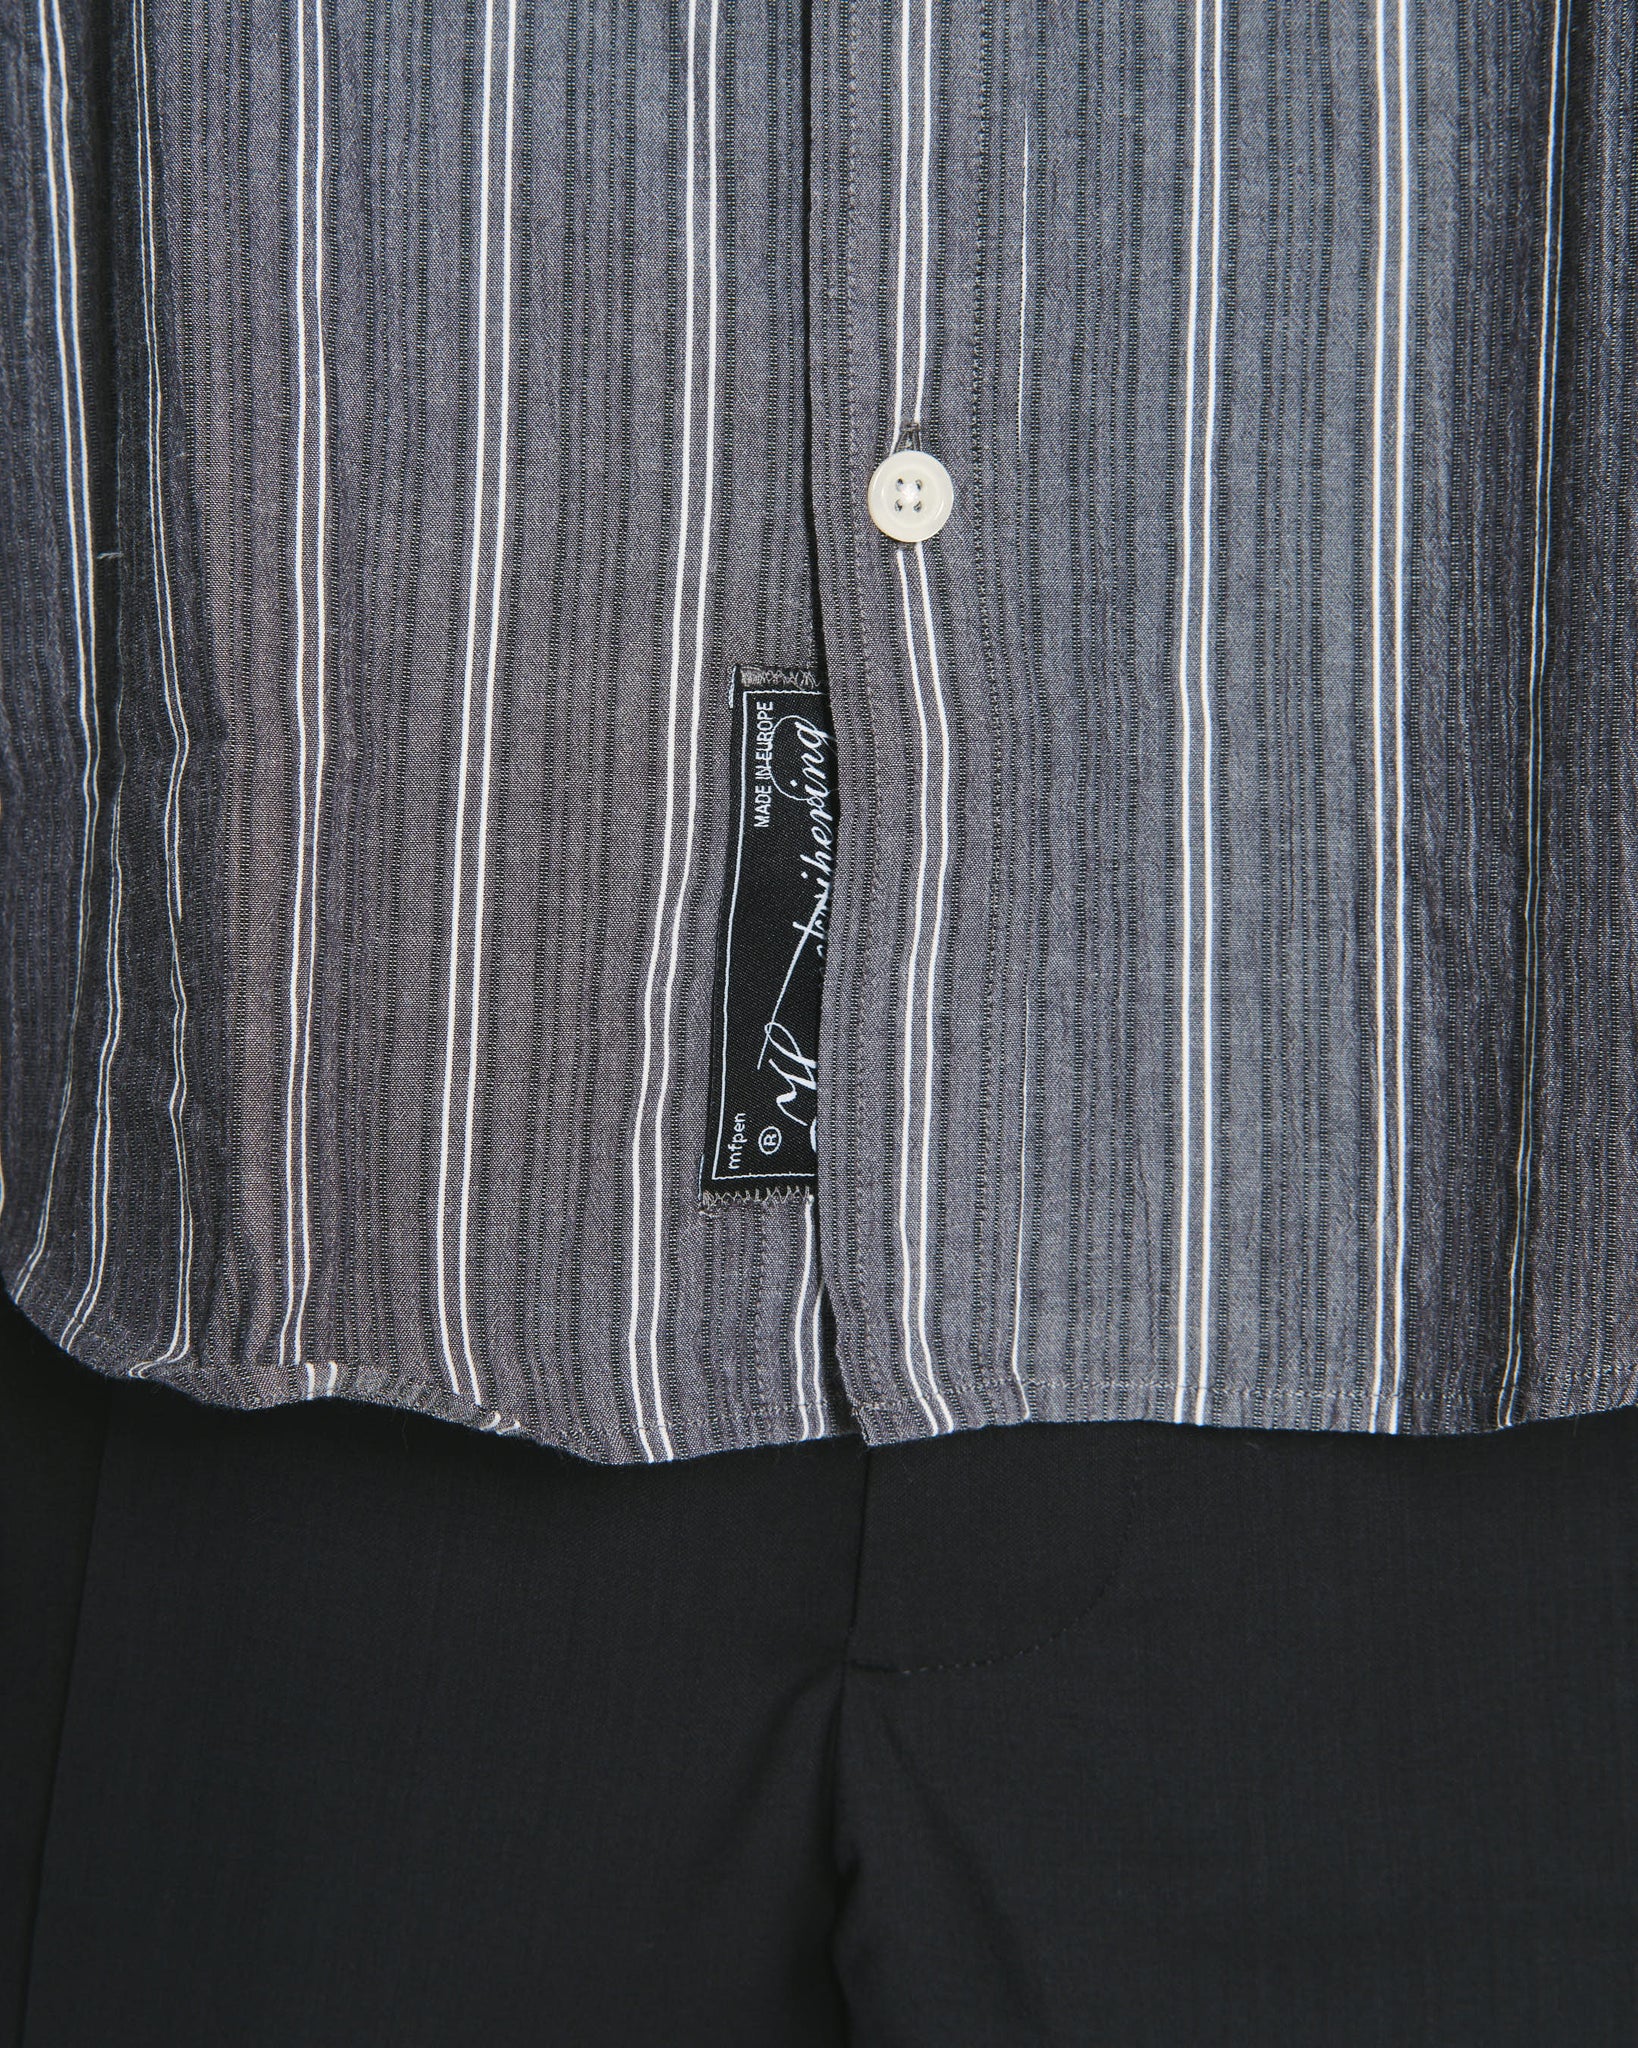 Distant Shirt - Grey Stripe